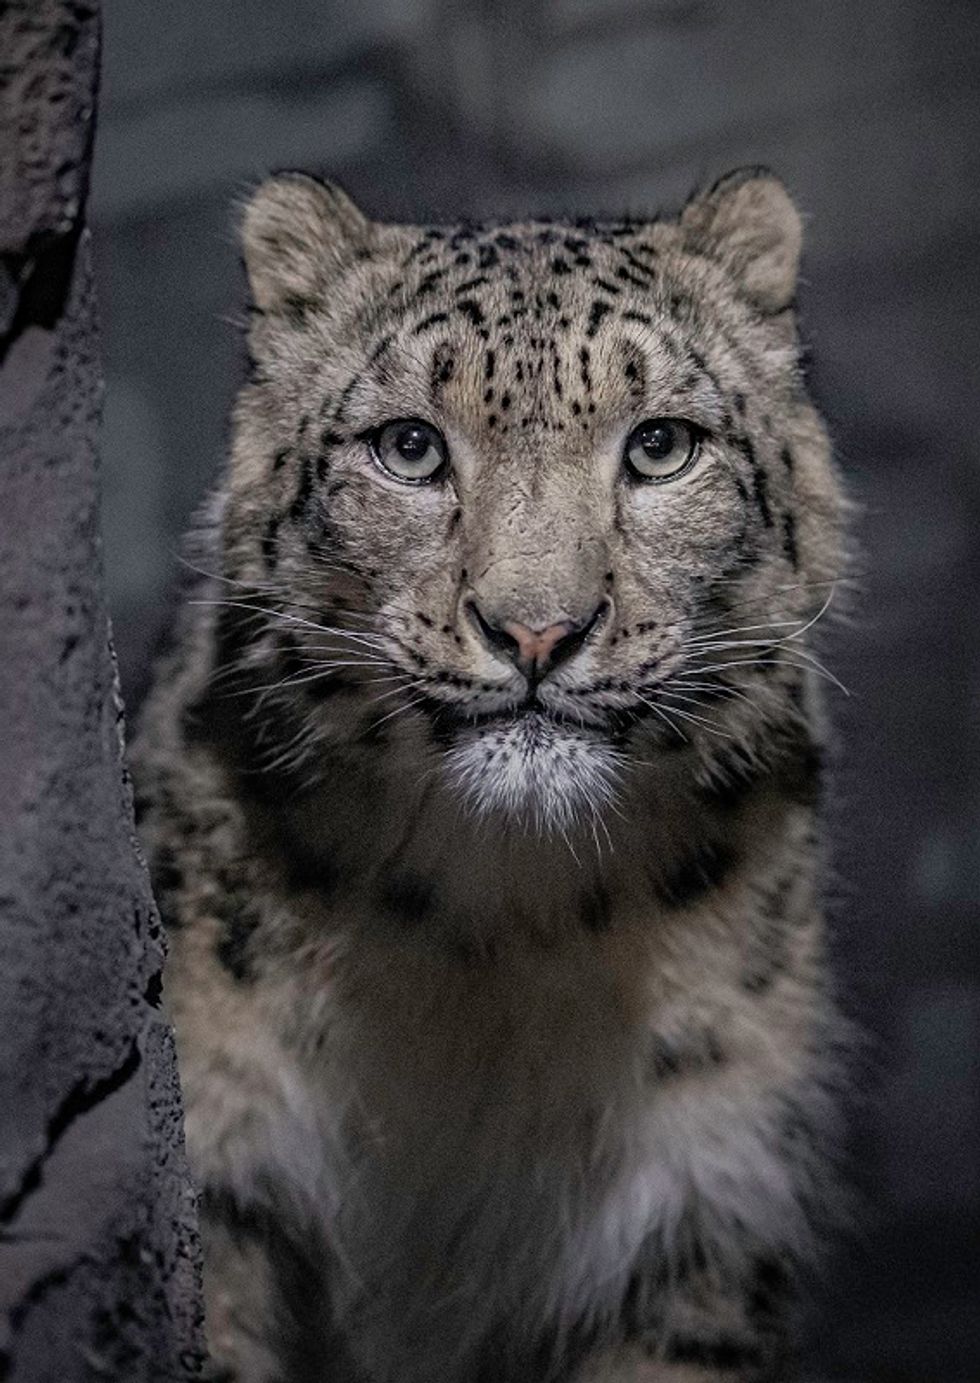 A close up photo of a snow leopard's face